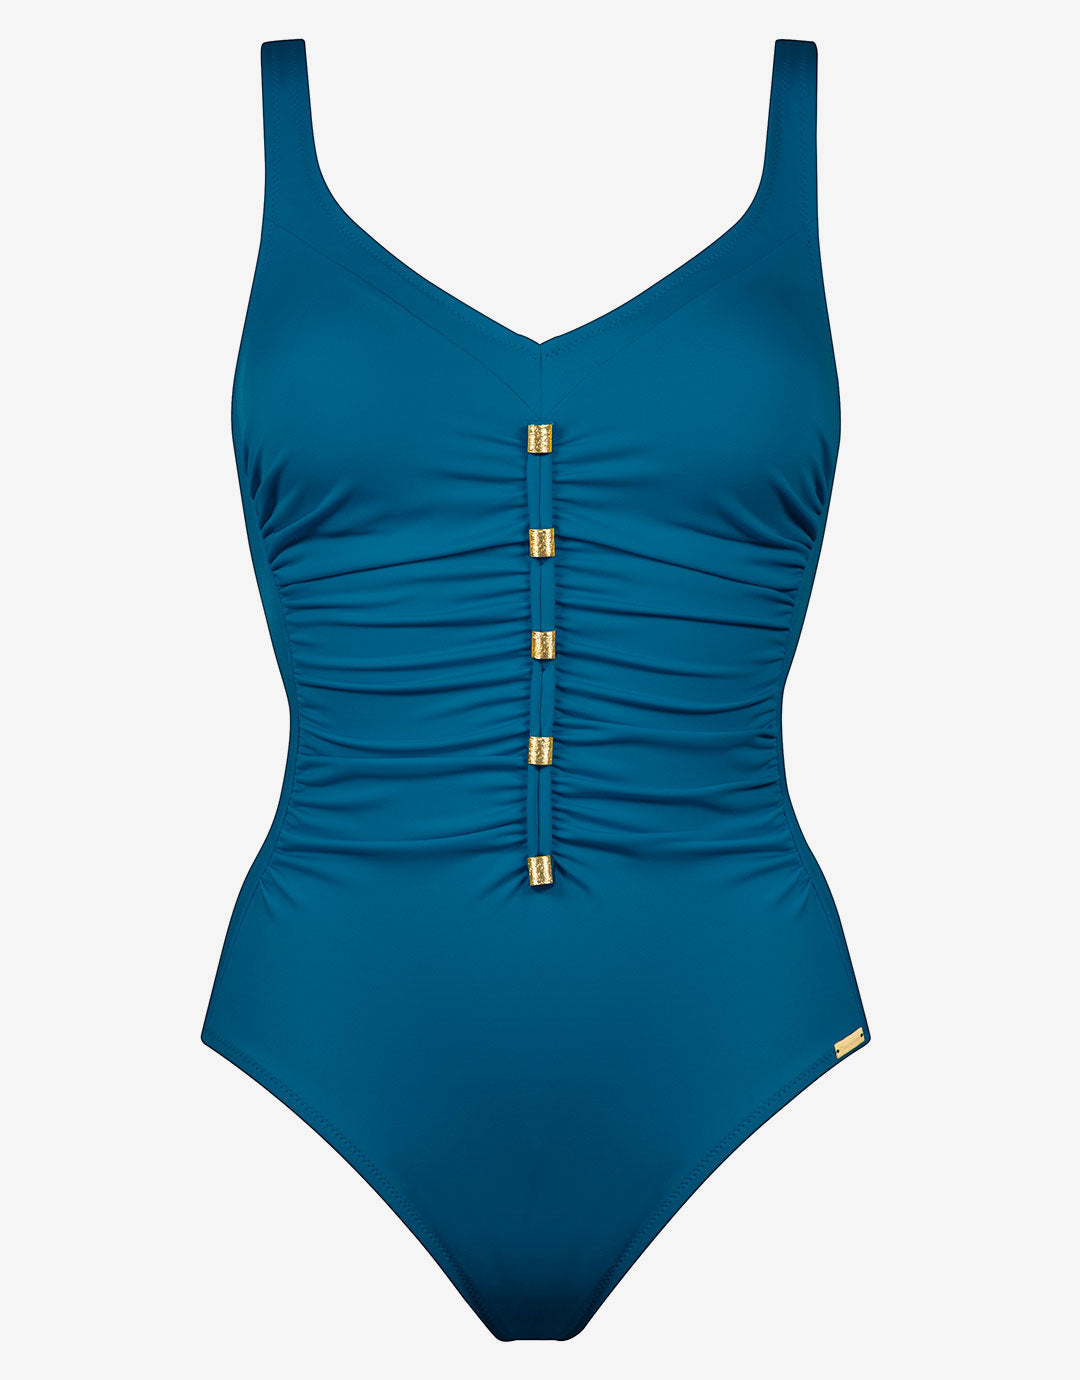 Uni Swimsuit - Ocean Blue - Simply Beach UK